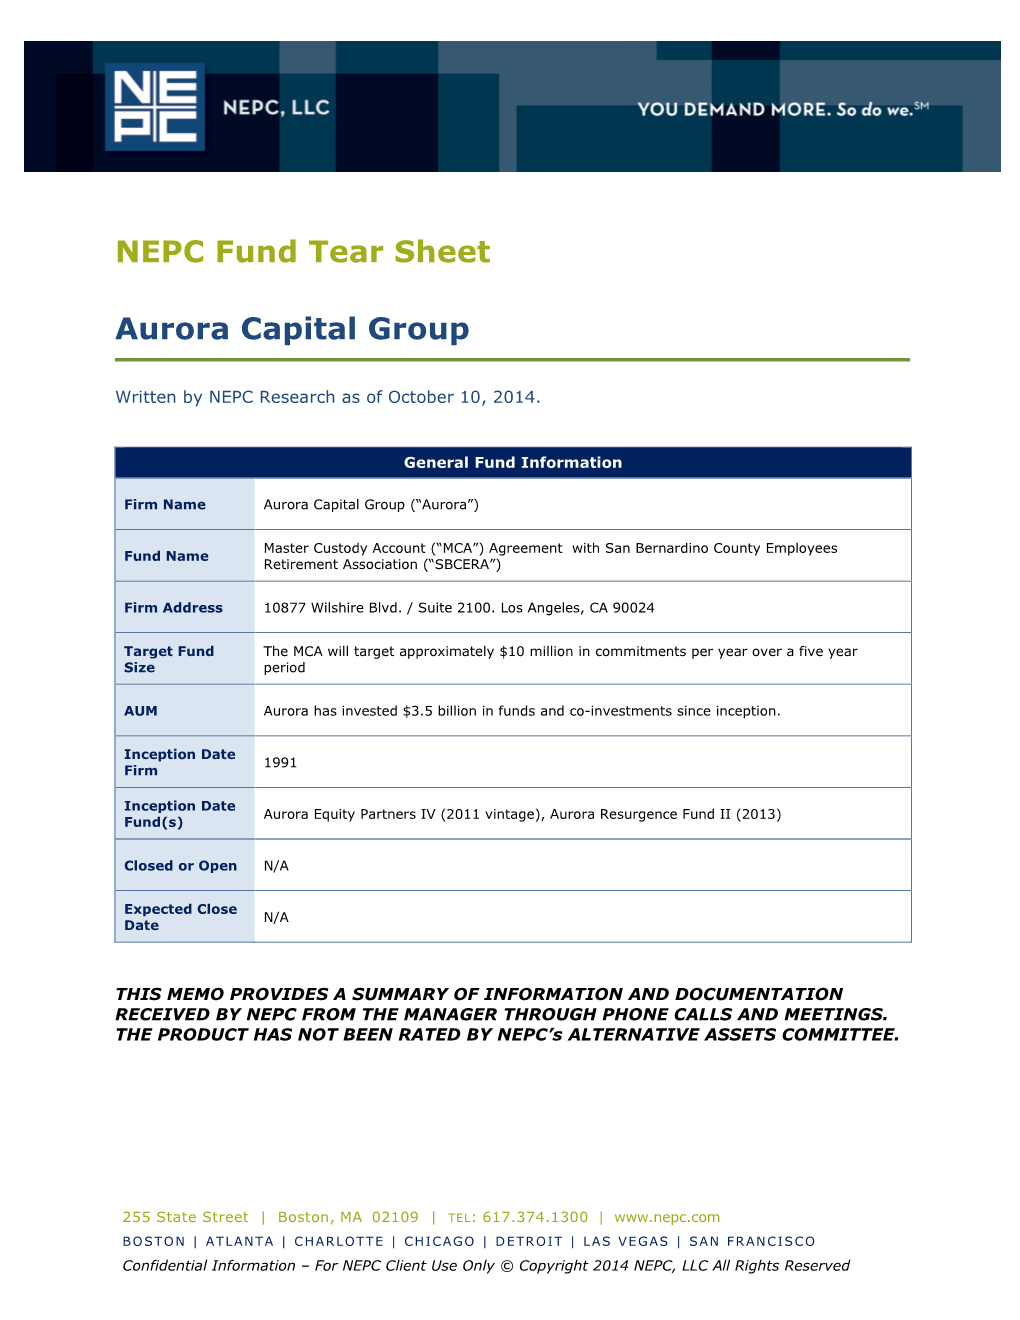 NEPC Fund Tear Sheet Aurora Capital Group MCA